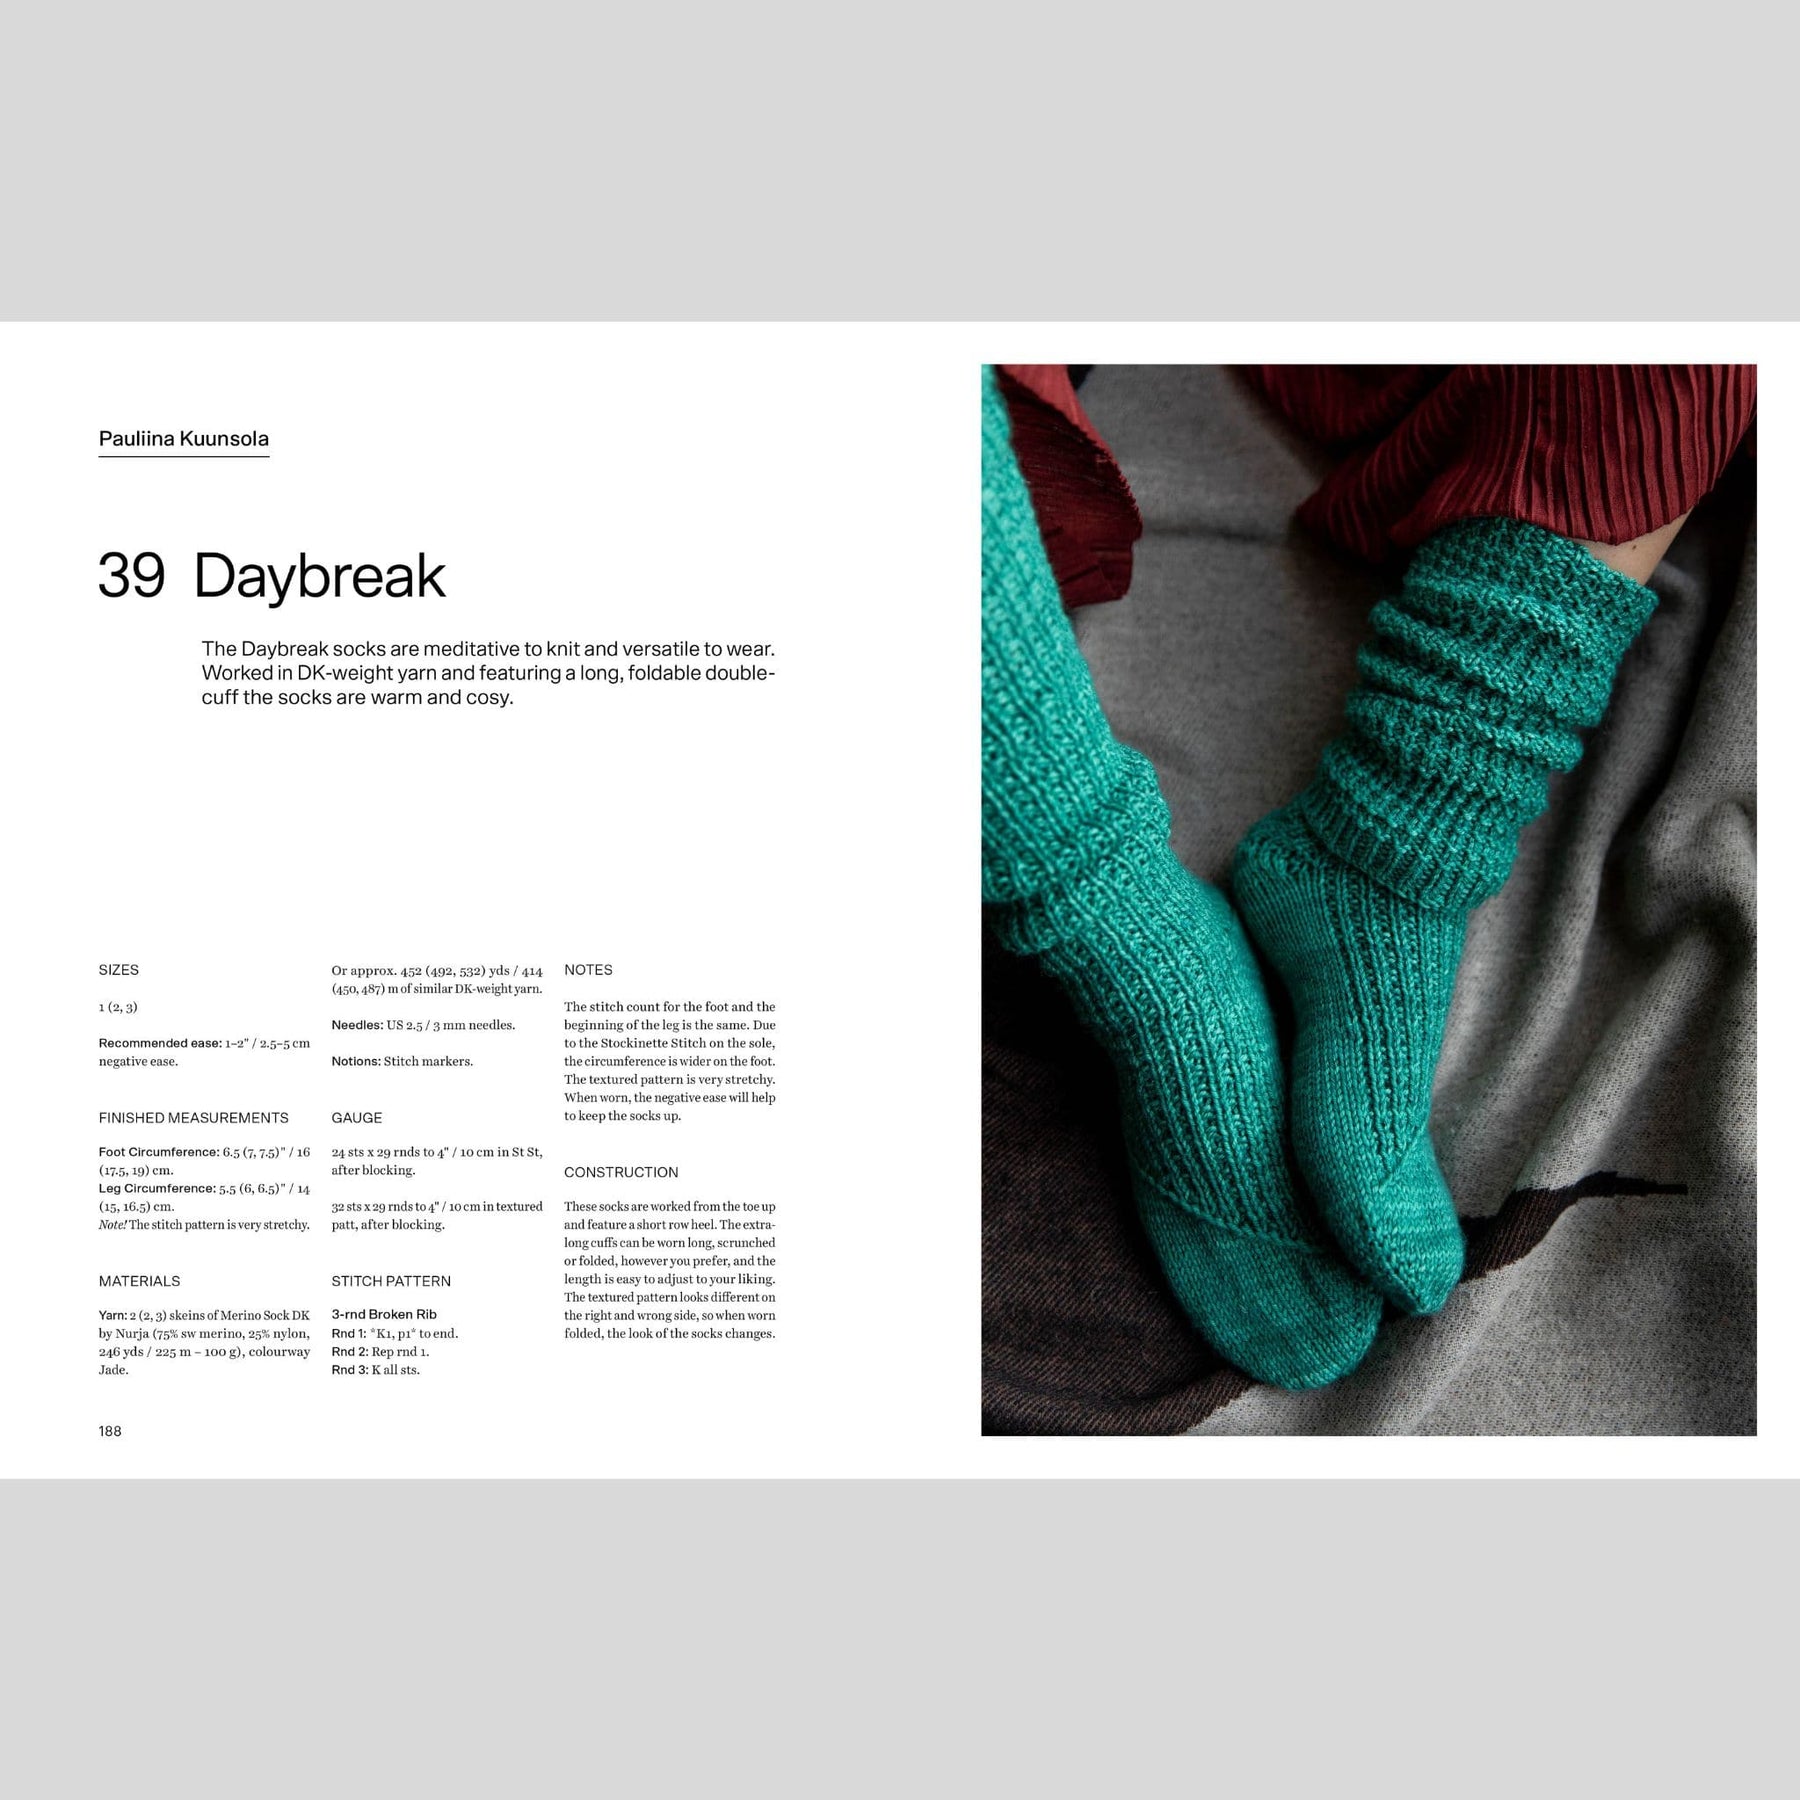 Laine - 52 Weeks of Socks - Paperback Edition - Yarn Worx